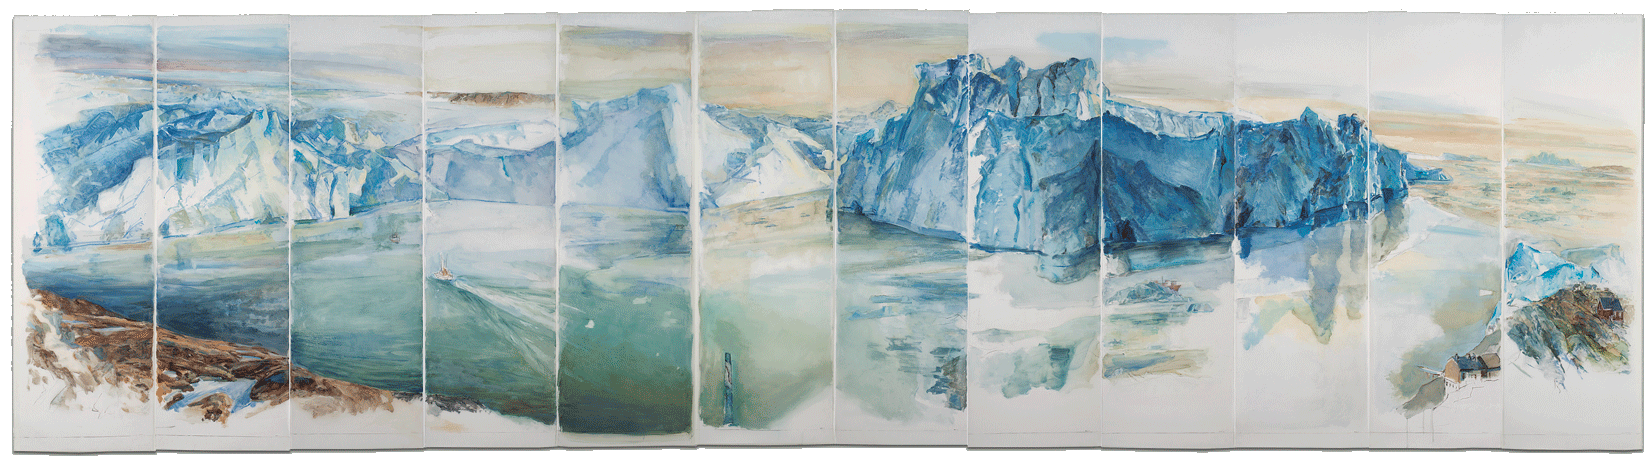 EDGE OF THE ICEFIORD  2009, 12-panel folding screen, oil on Mylar,  